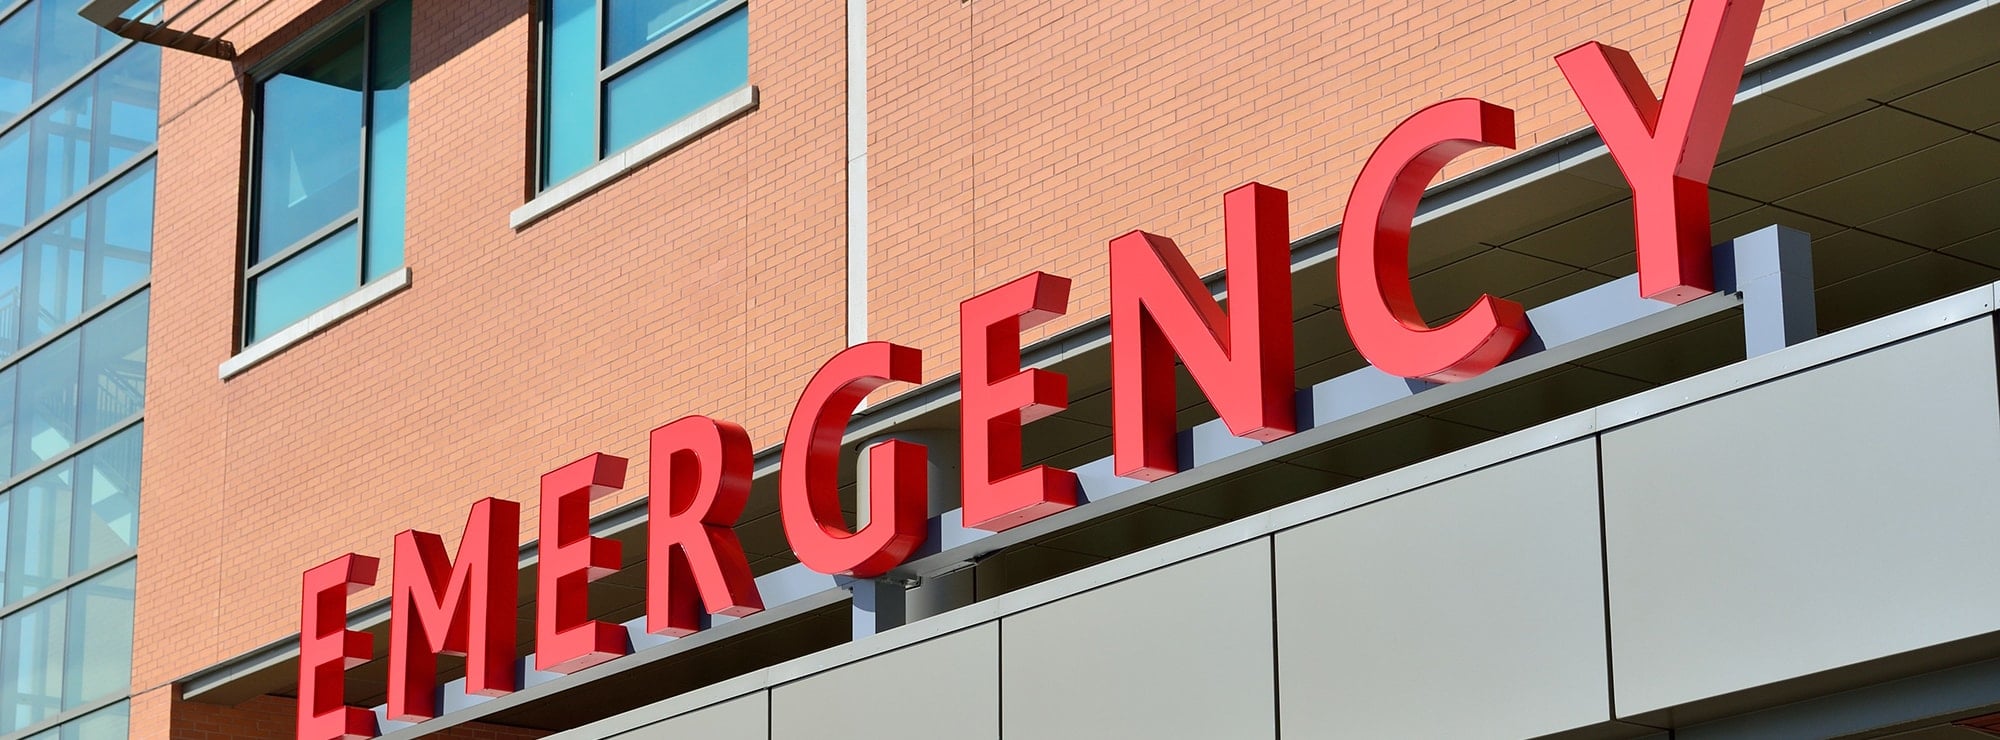 Emergency sign outside of hospital